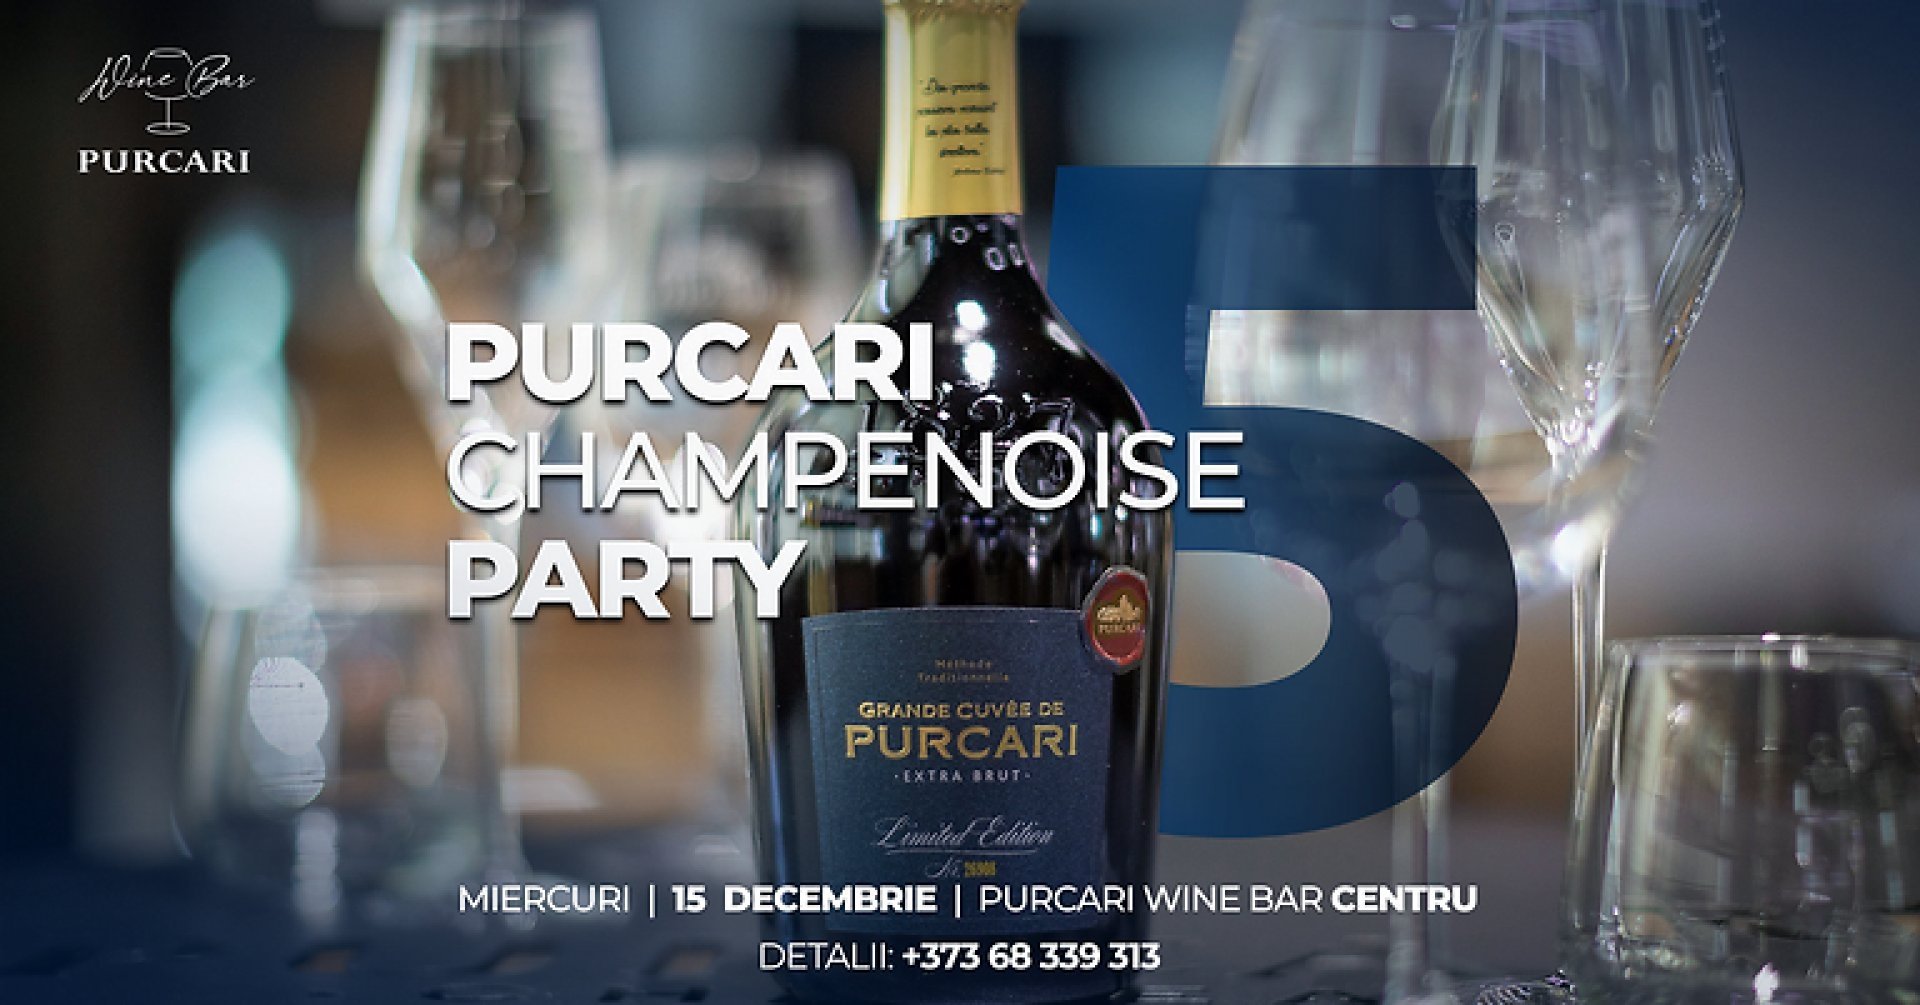 Purcari champenoise party!